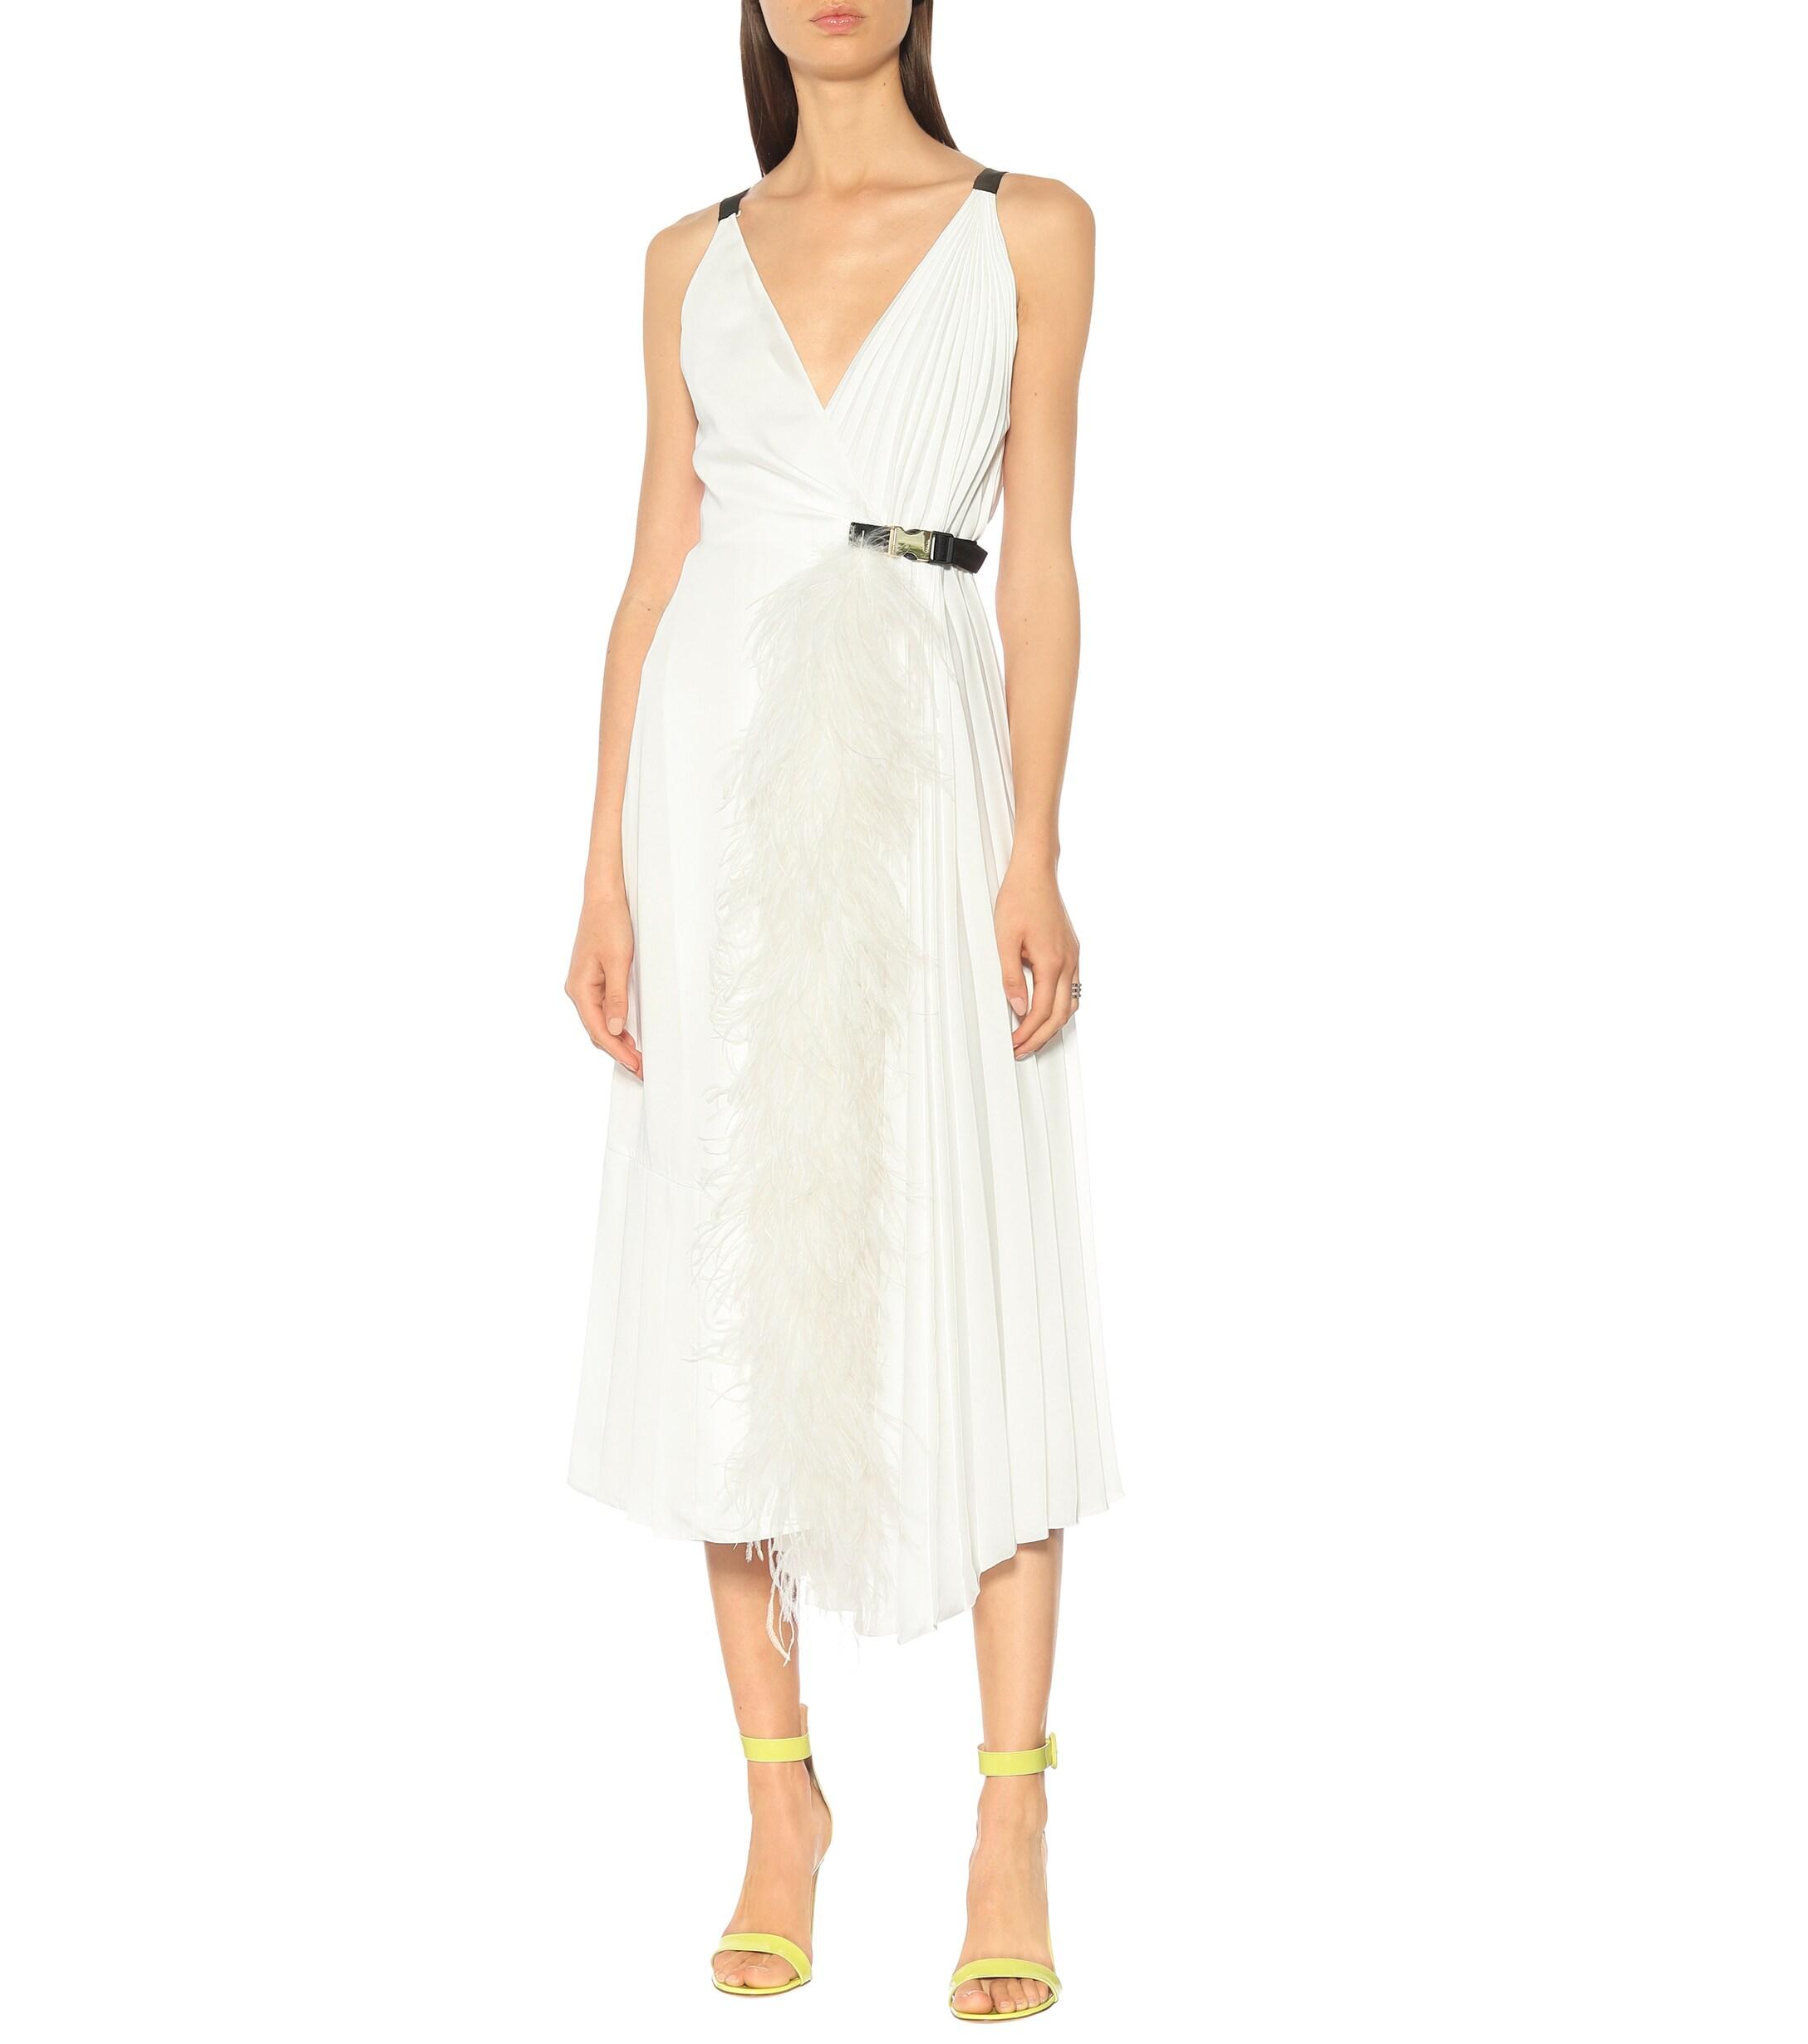 Prada Feather-trimmed Silk-twill Dress in White - Lyst